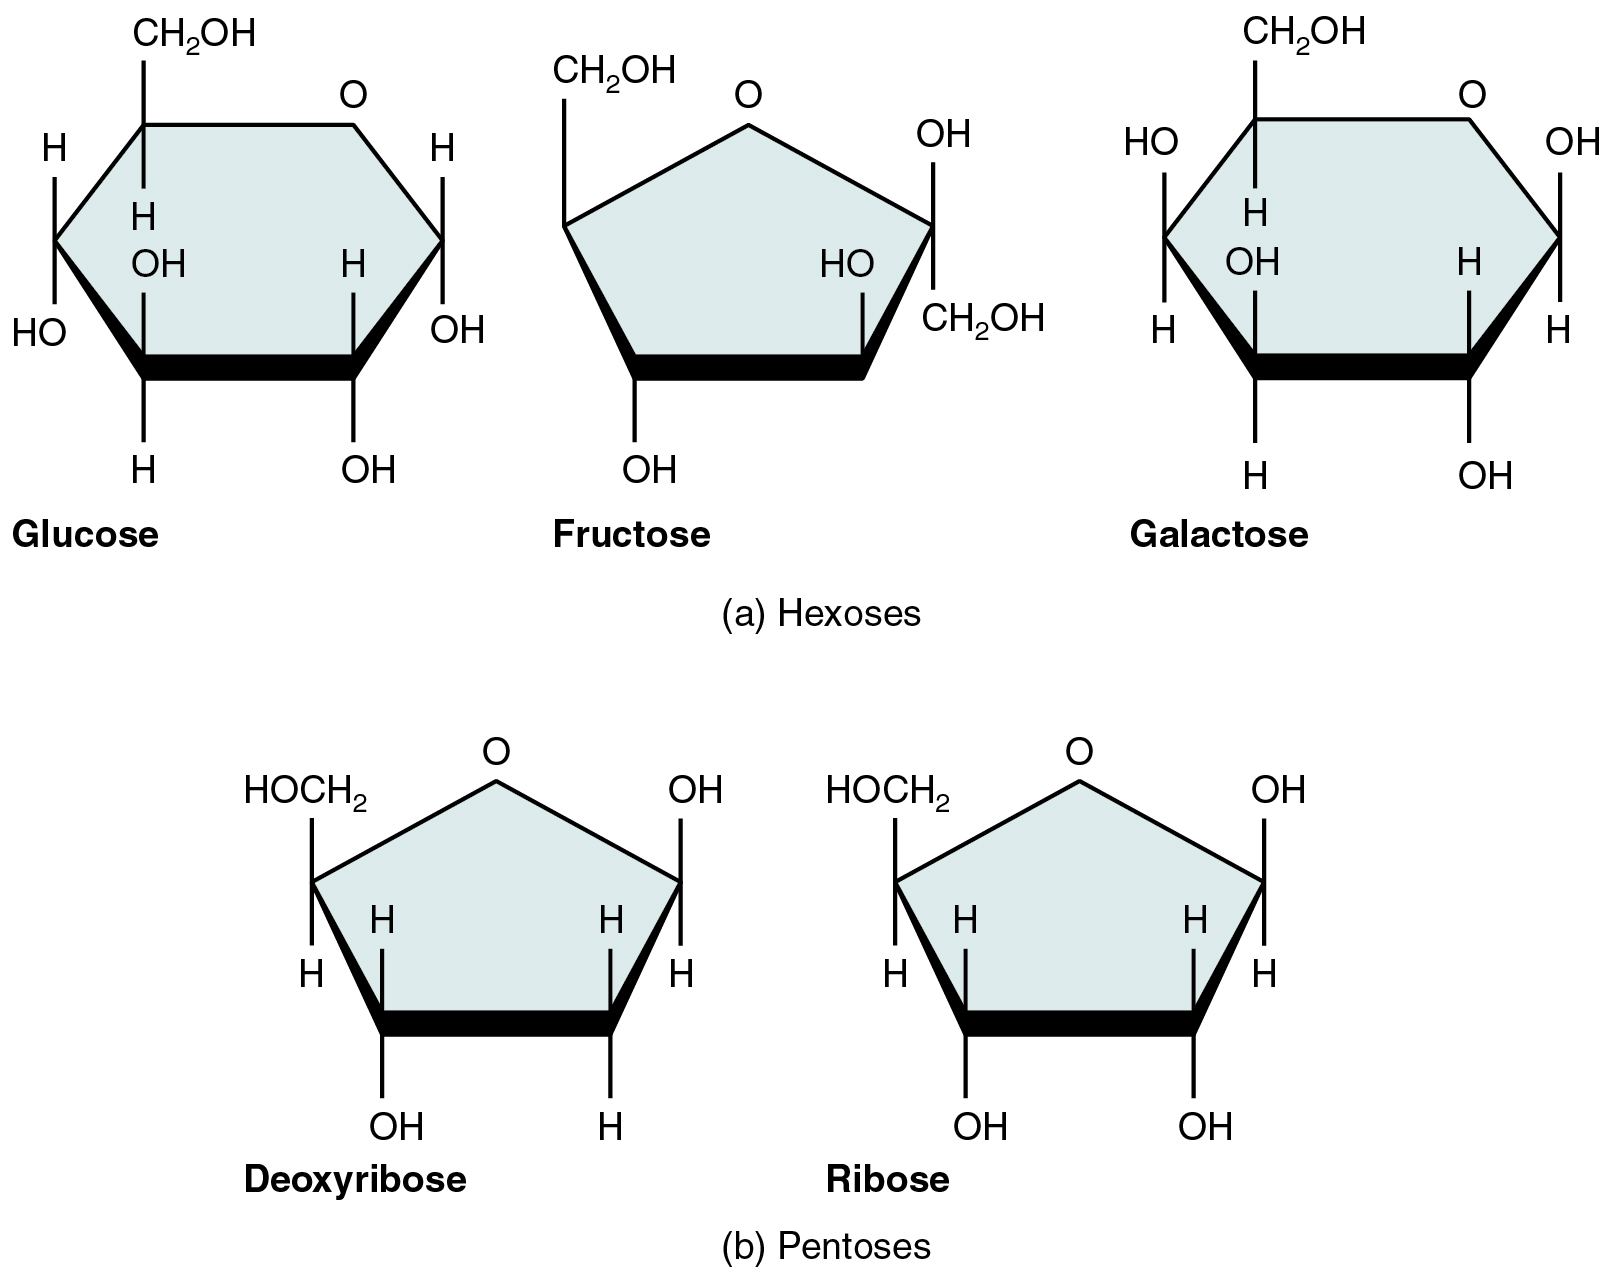 Esta figura mostra a estrutura da glicose, frutose, galactose, desoxirribose e ribose.